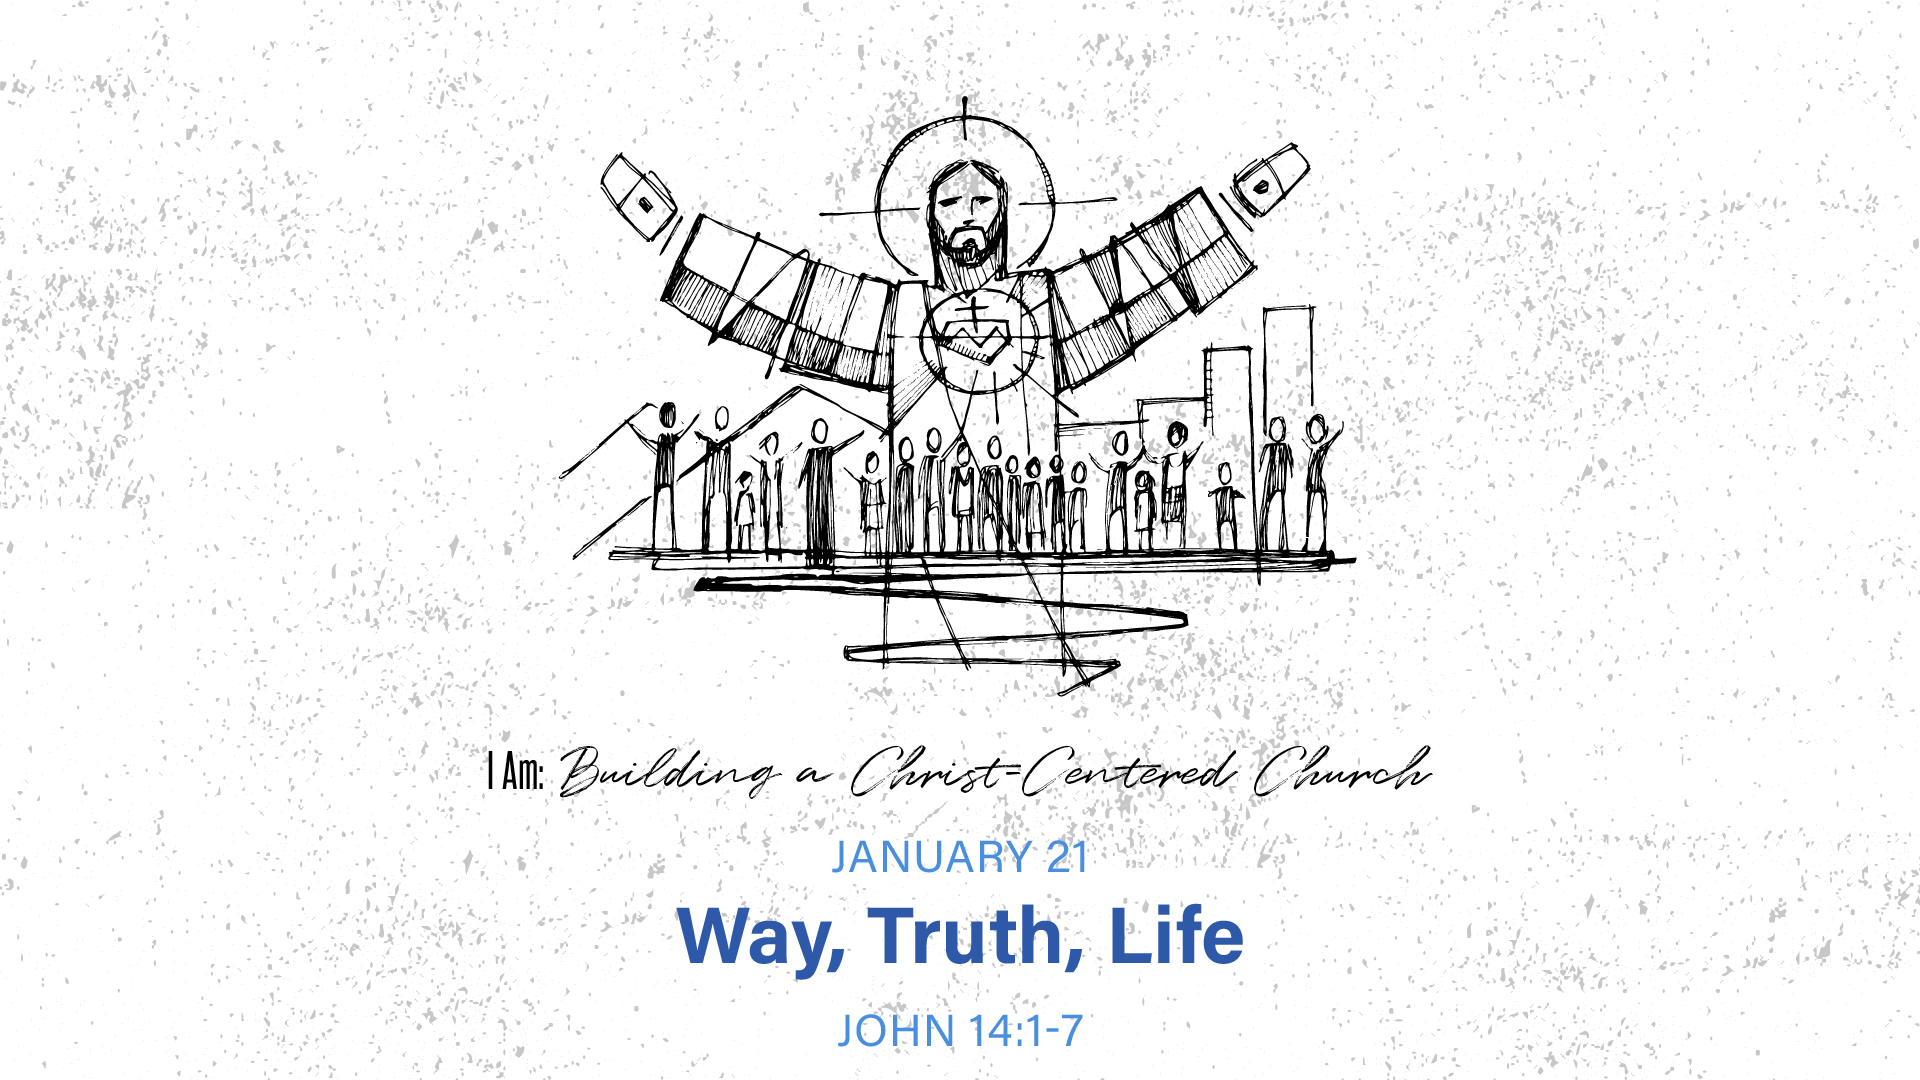 I Am: Building a Christ-Centered Church: Way, Truth, Life